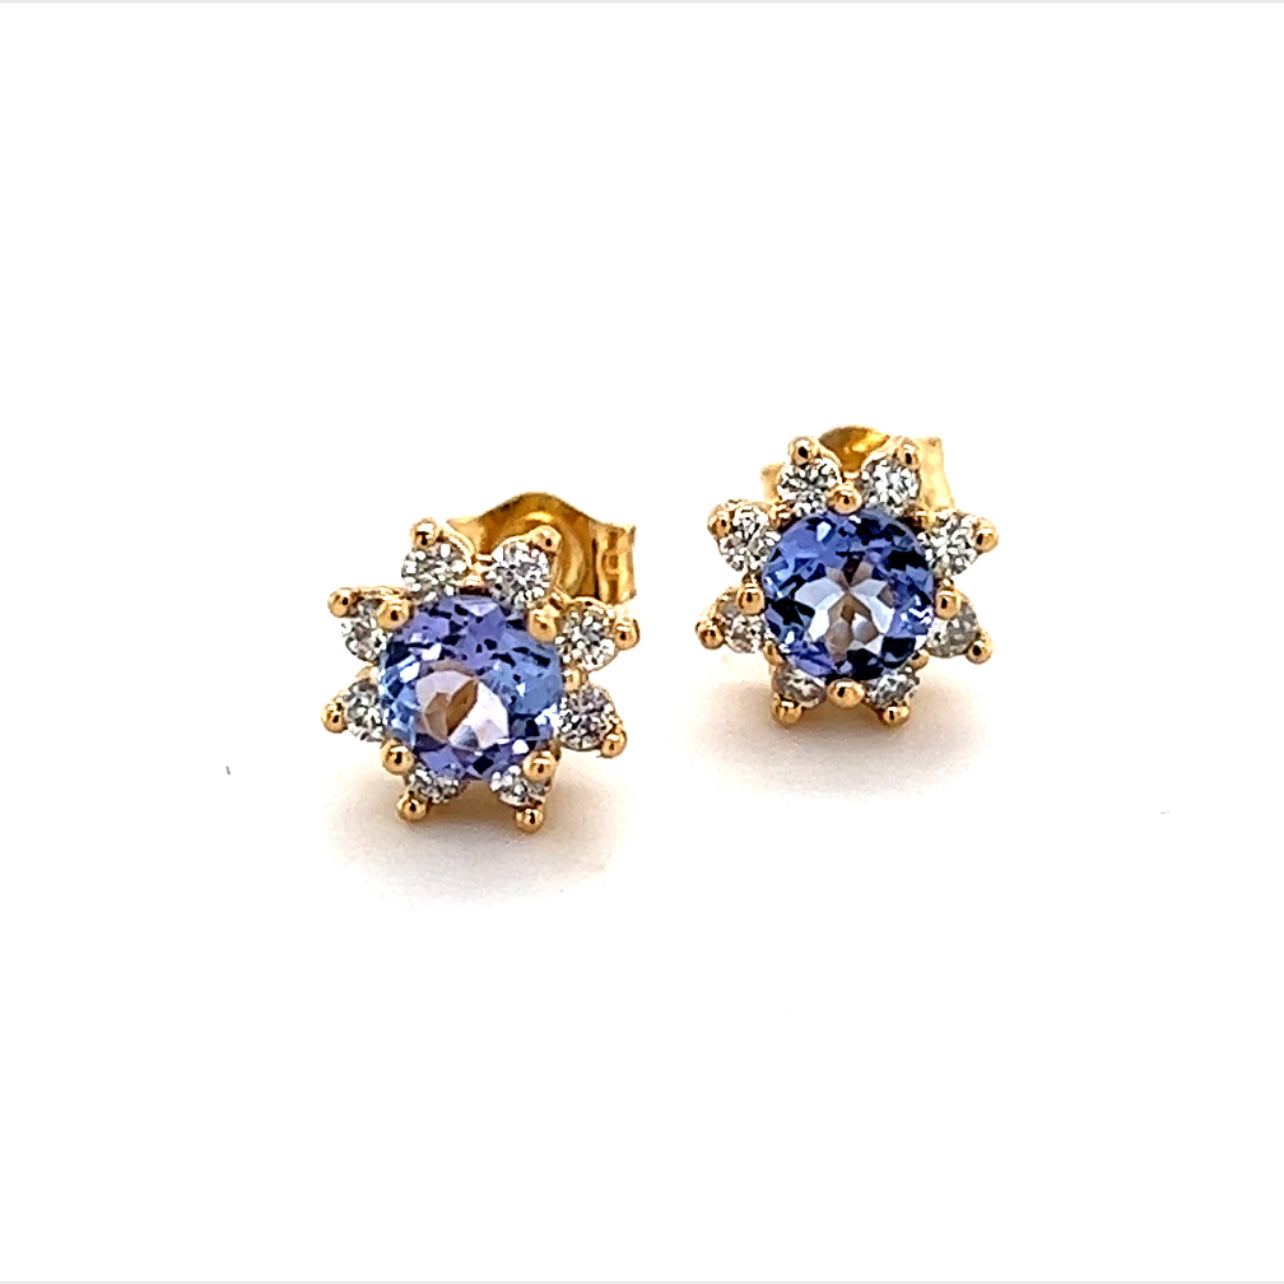 Natural Sapphire Diamond Earrings 14k Gold 1.0 TCW Certified $2,490 210747